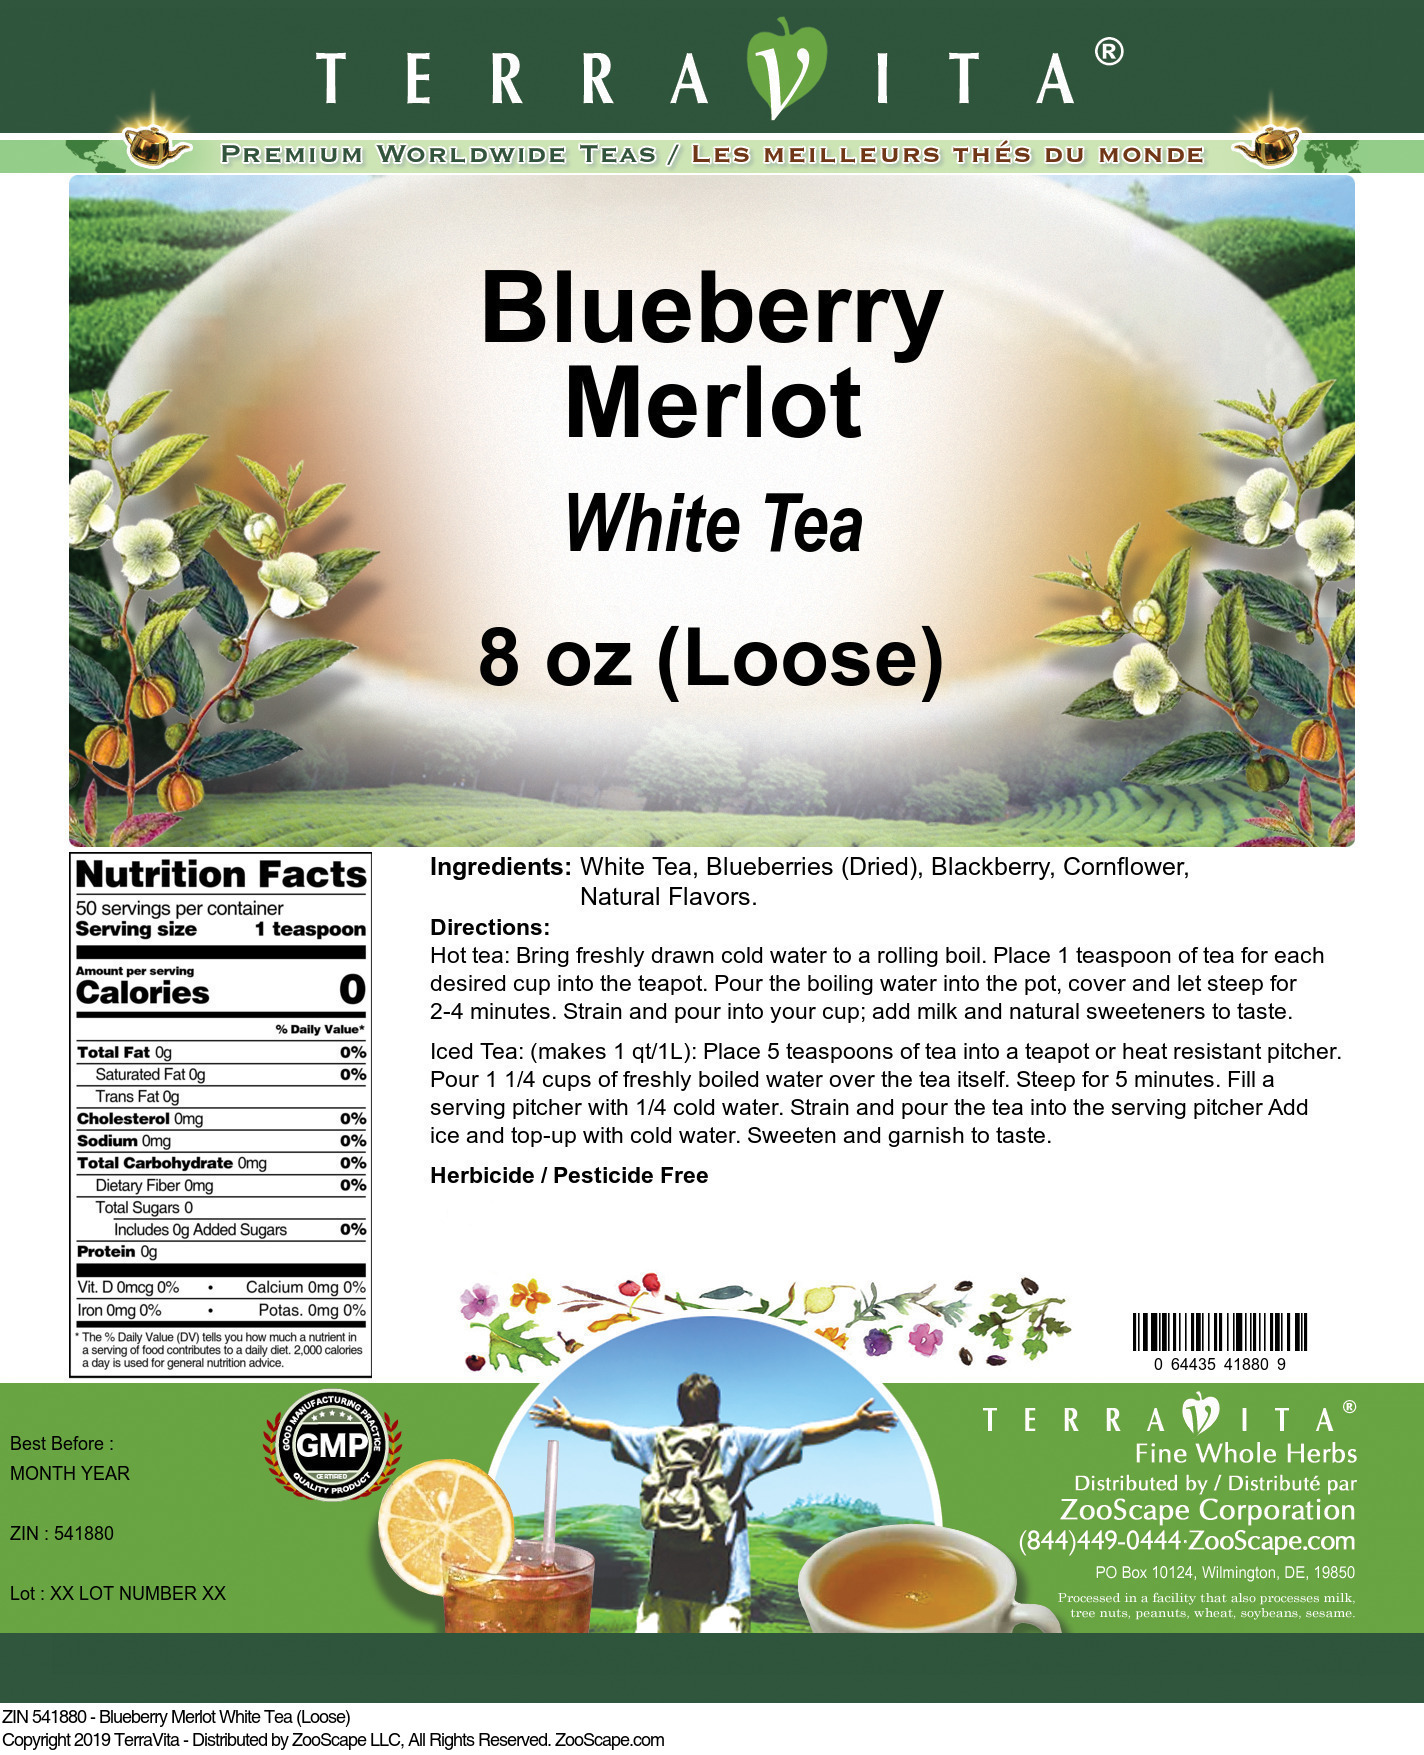 Blueberry Merlot White Tea (Loose) - Label